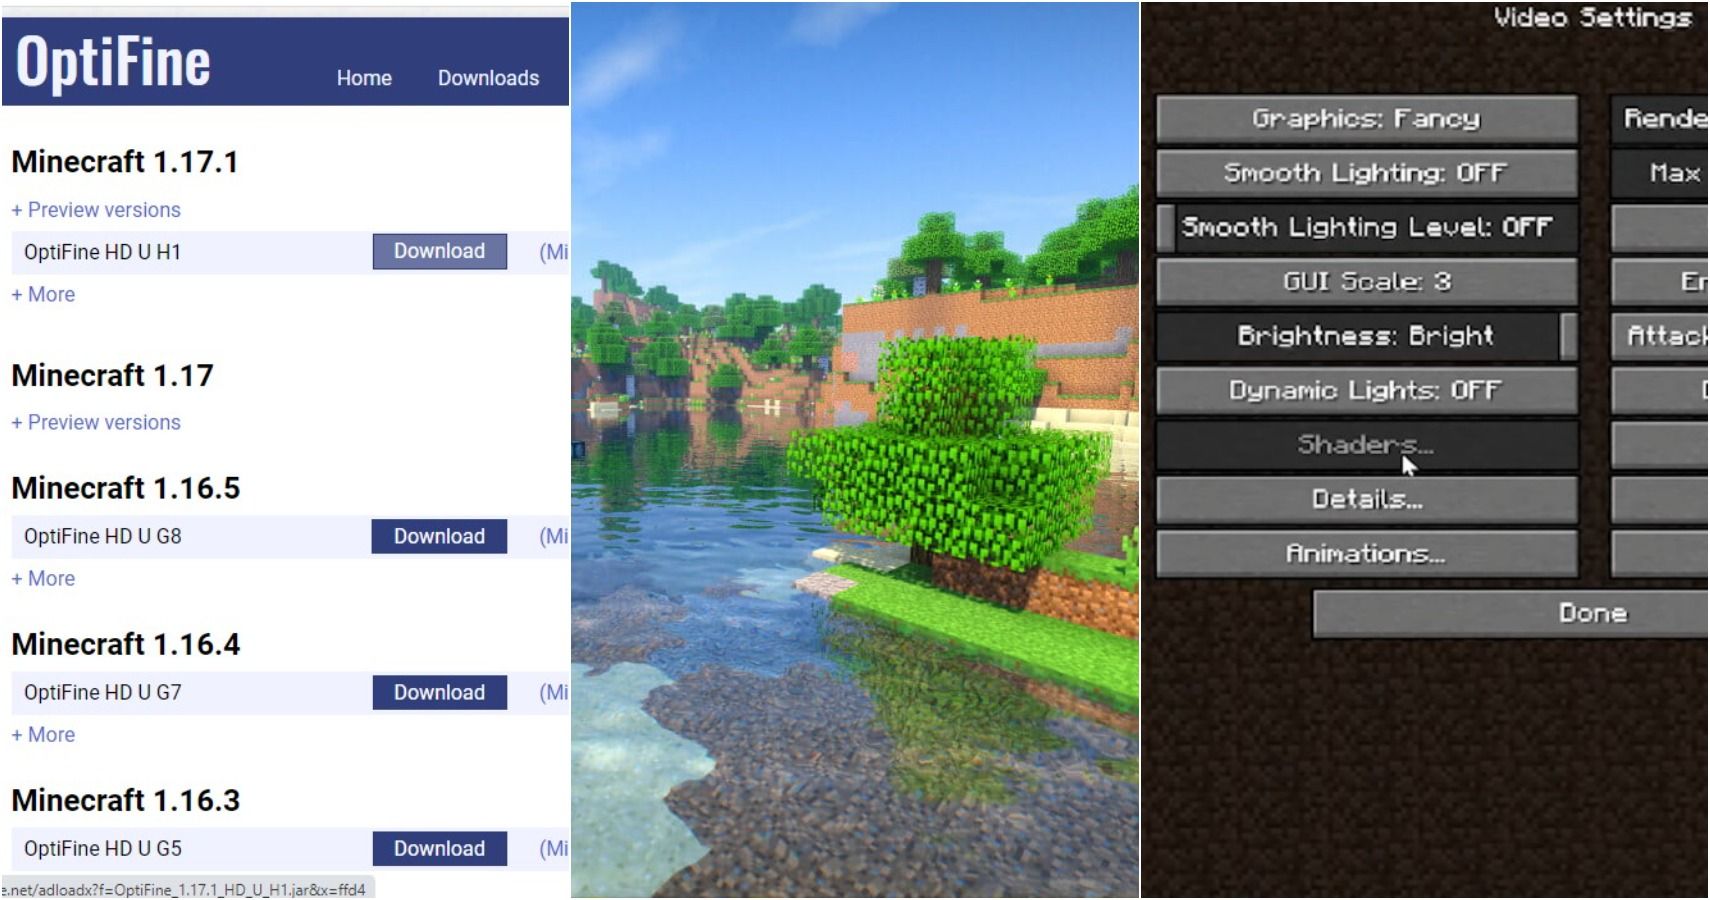 split image of OptiFine website, Minecraft wilderness, and video settings in Minecraft